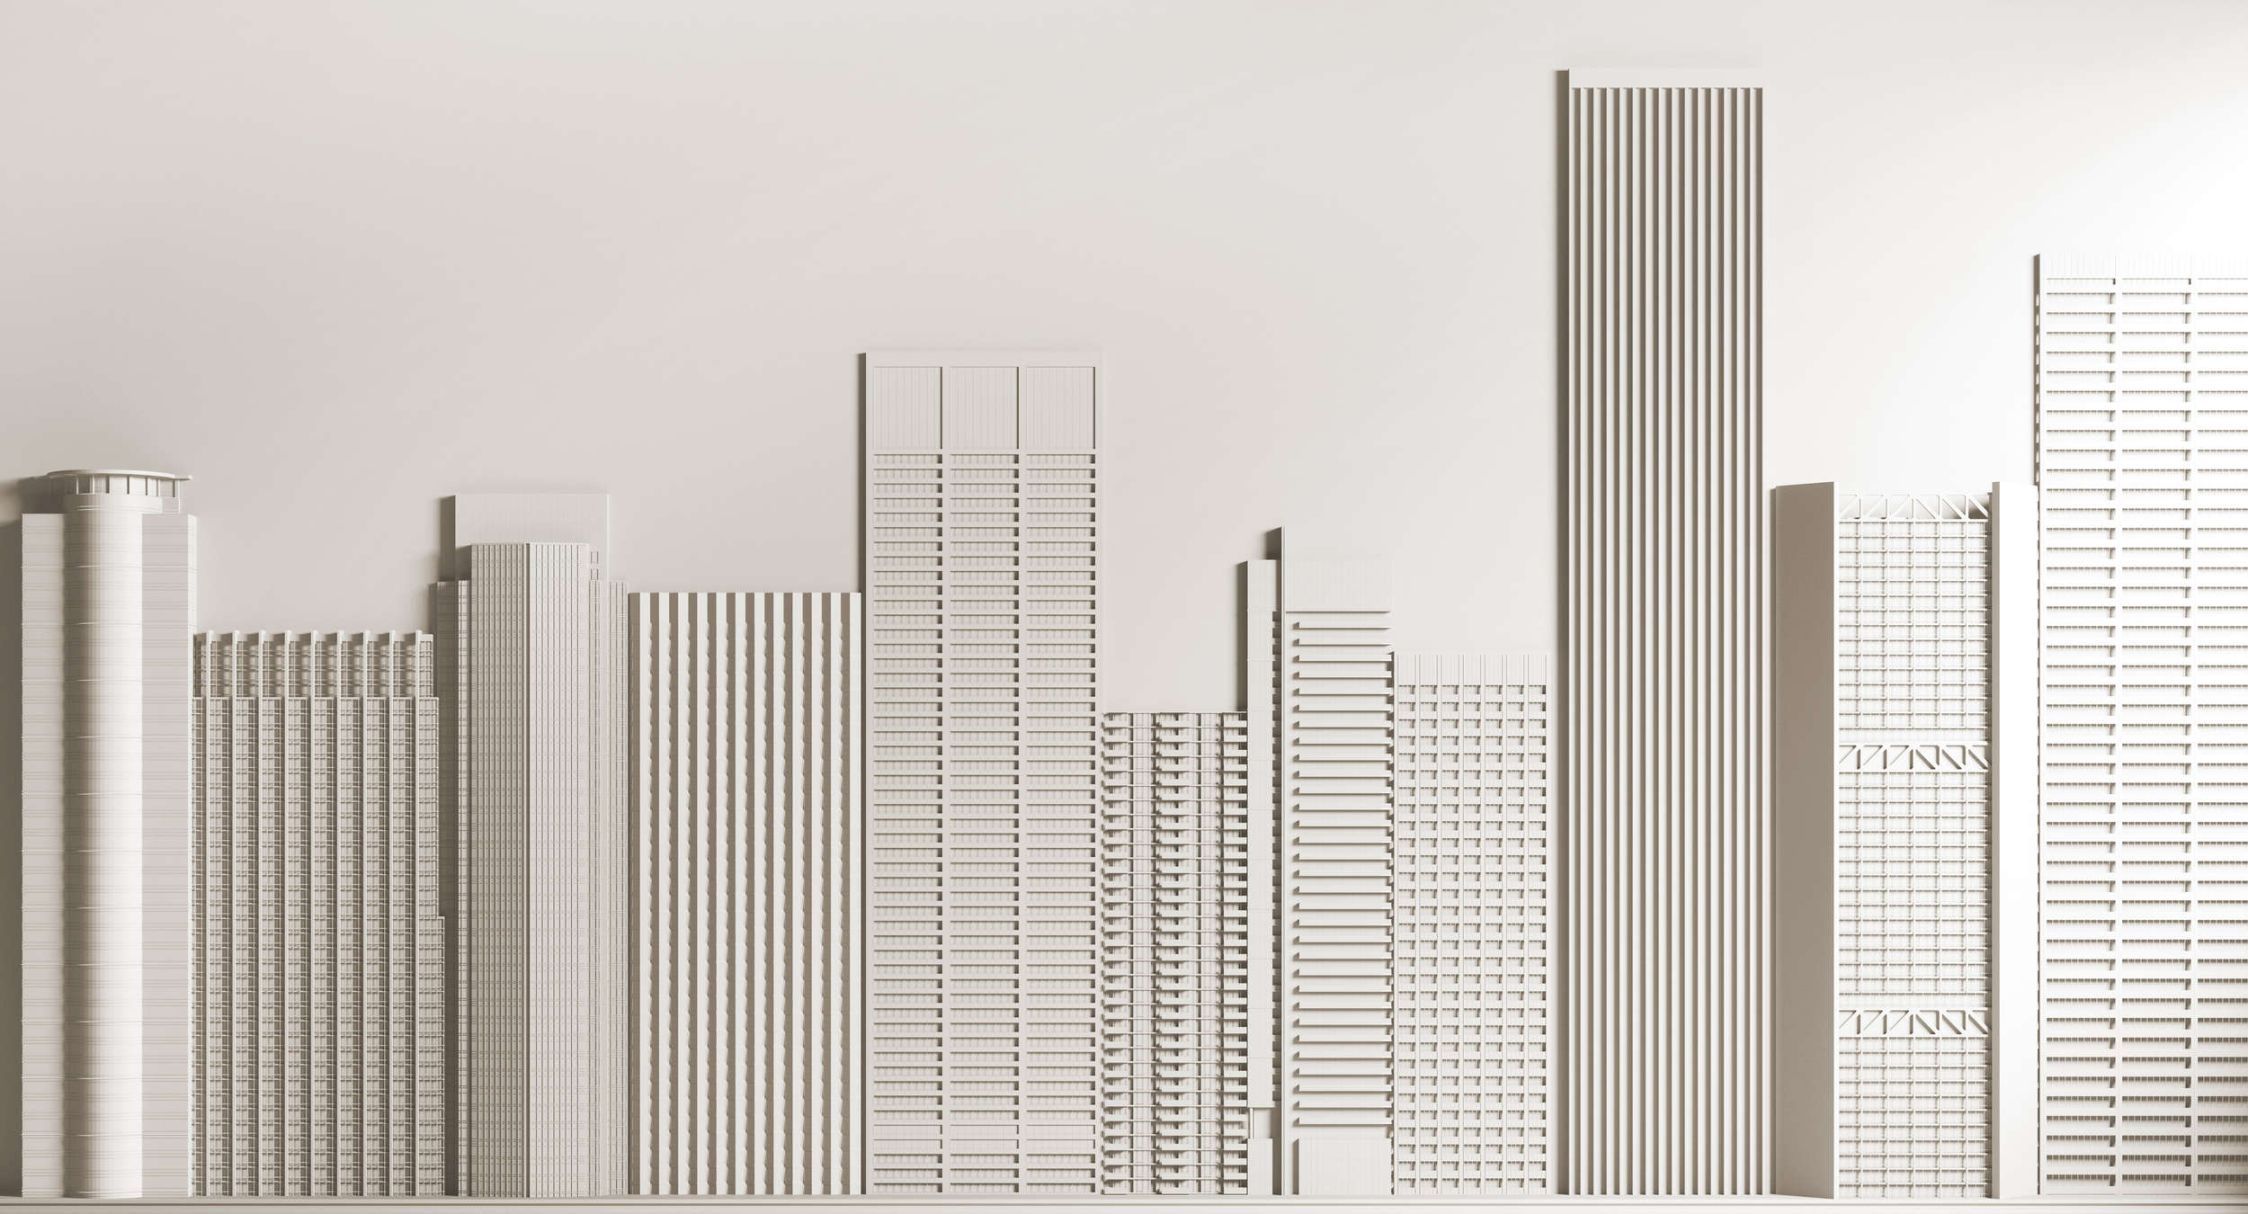             Fotomural »new skyline« - Arquitectura con rascacielos - Tela sin tejer lisa, ligeramente nacarada
        